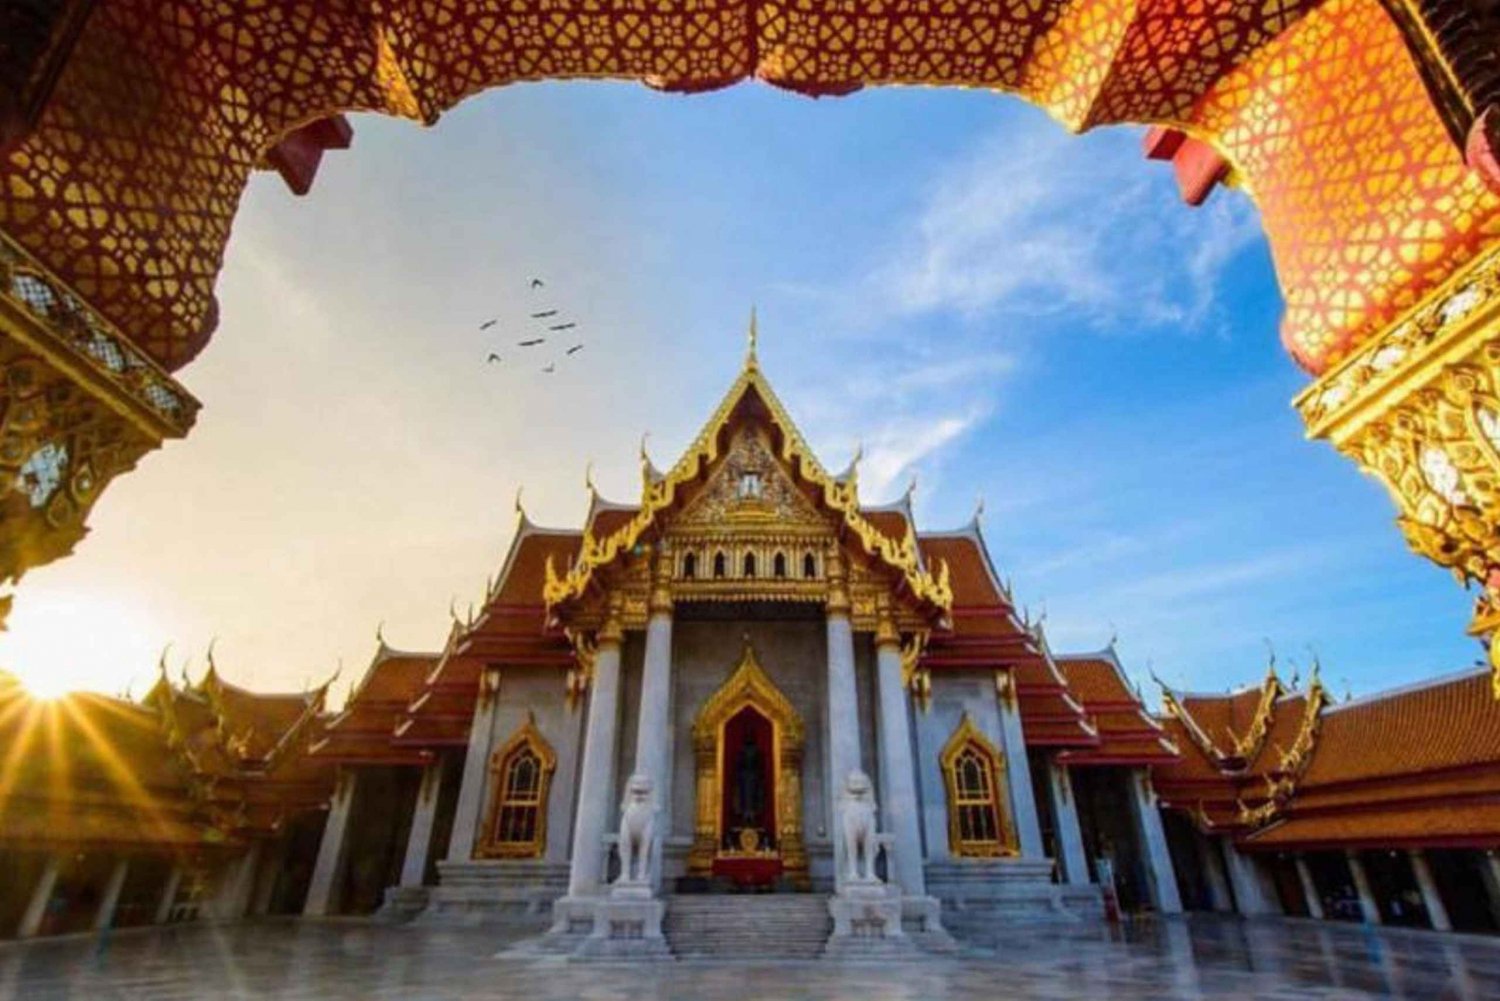 Bangkokissa: Buddha + Marmoritemppeli) Bangkok: 2 temppelikierros (Kultainen Buddha + Marmoritemppeli)